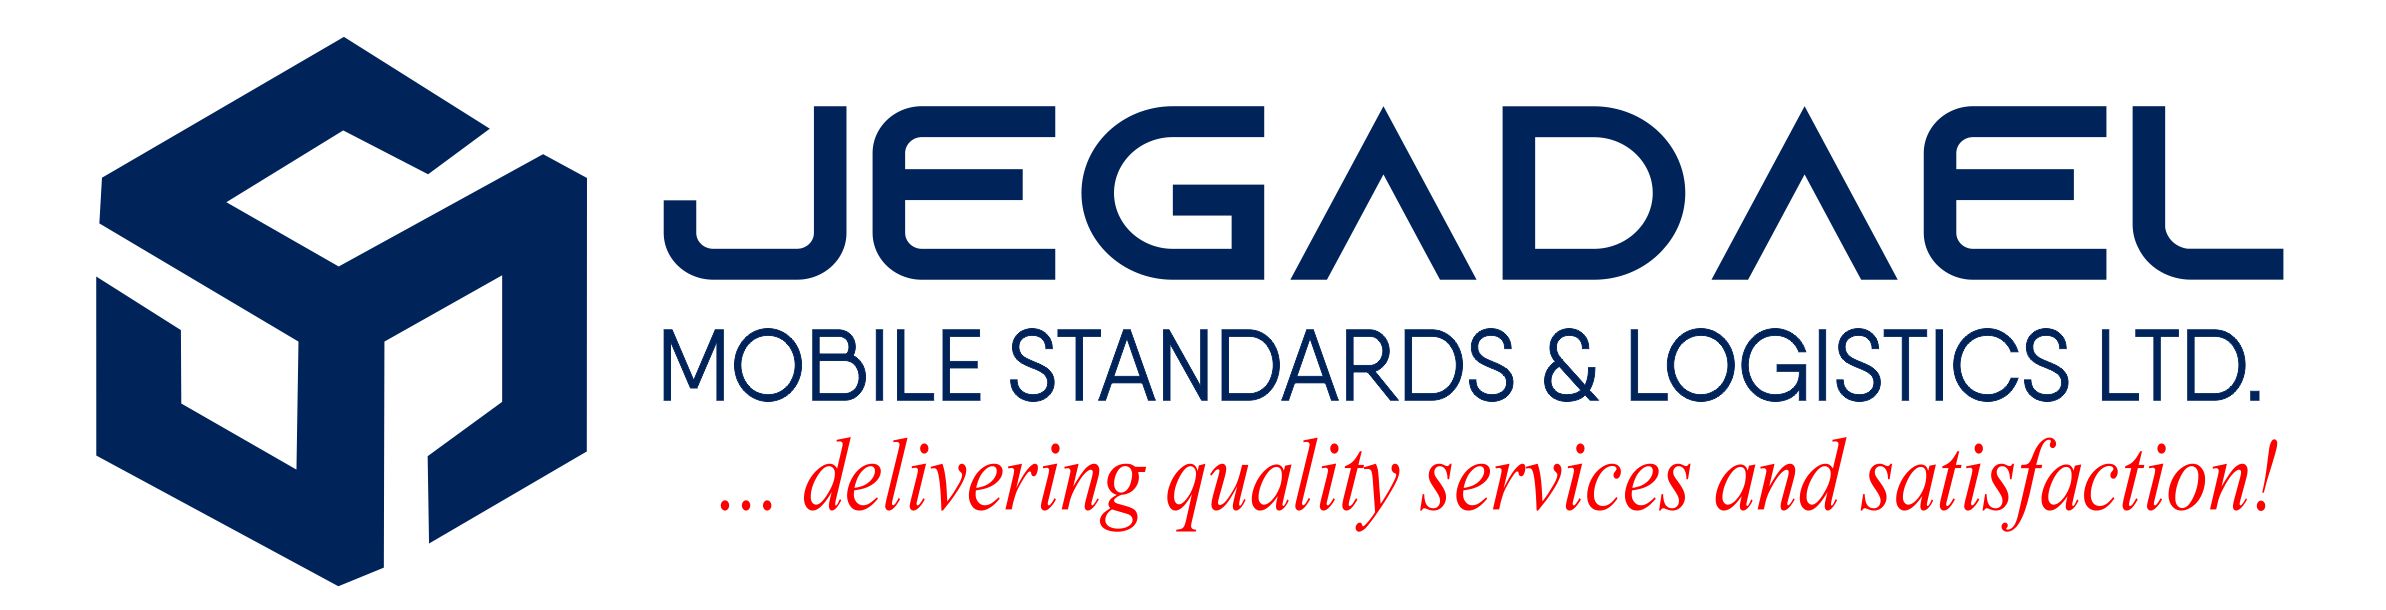 JEGADAEL Mobile Standards & Logistics Ltd